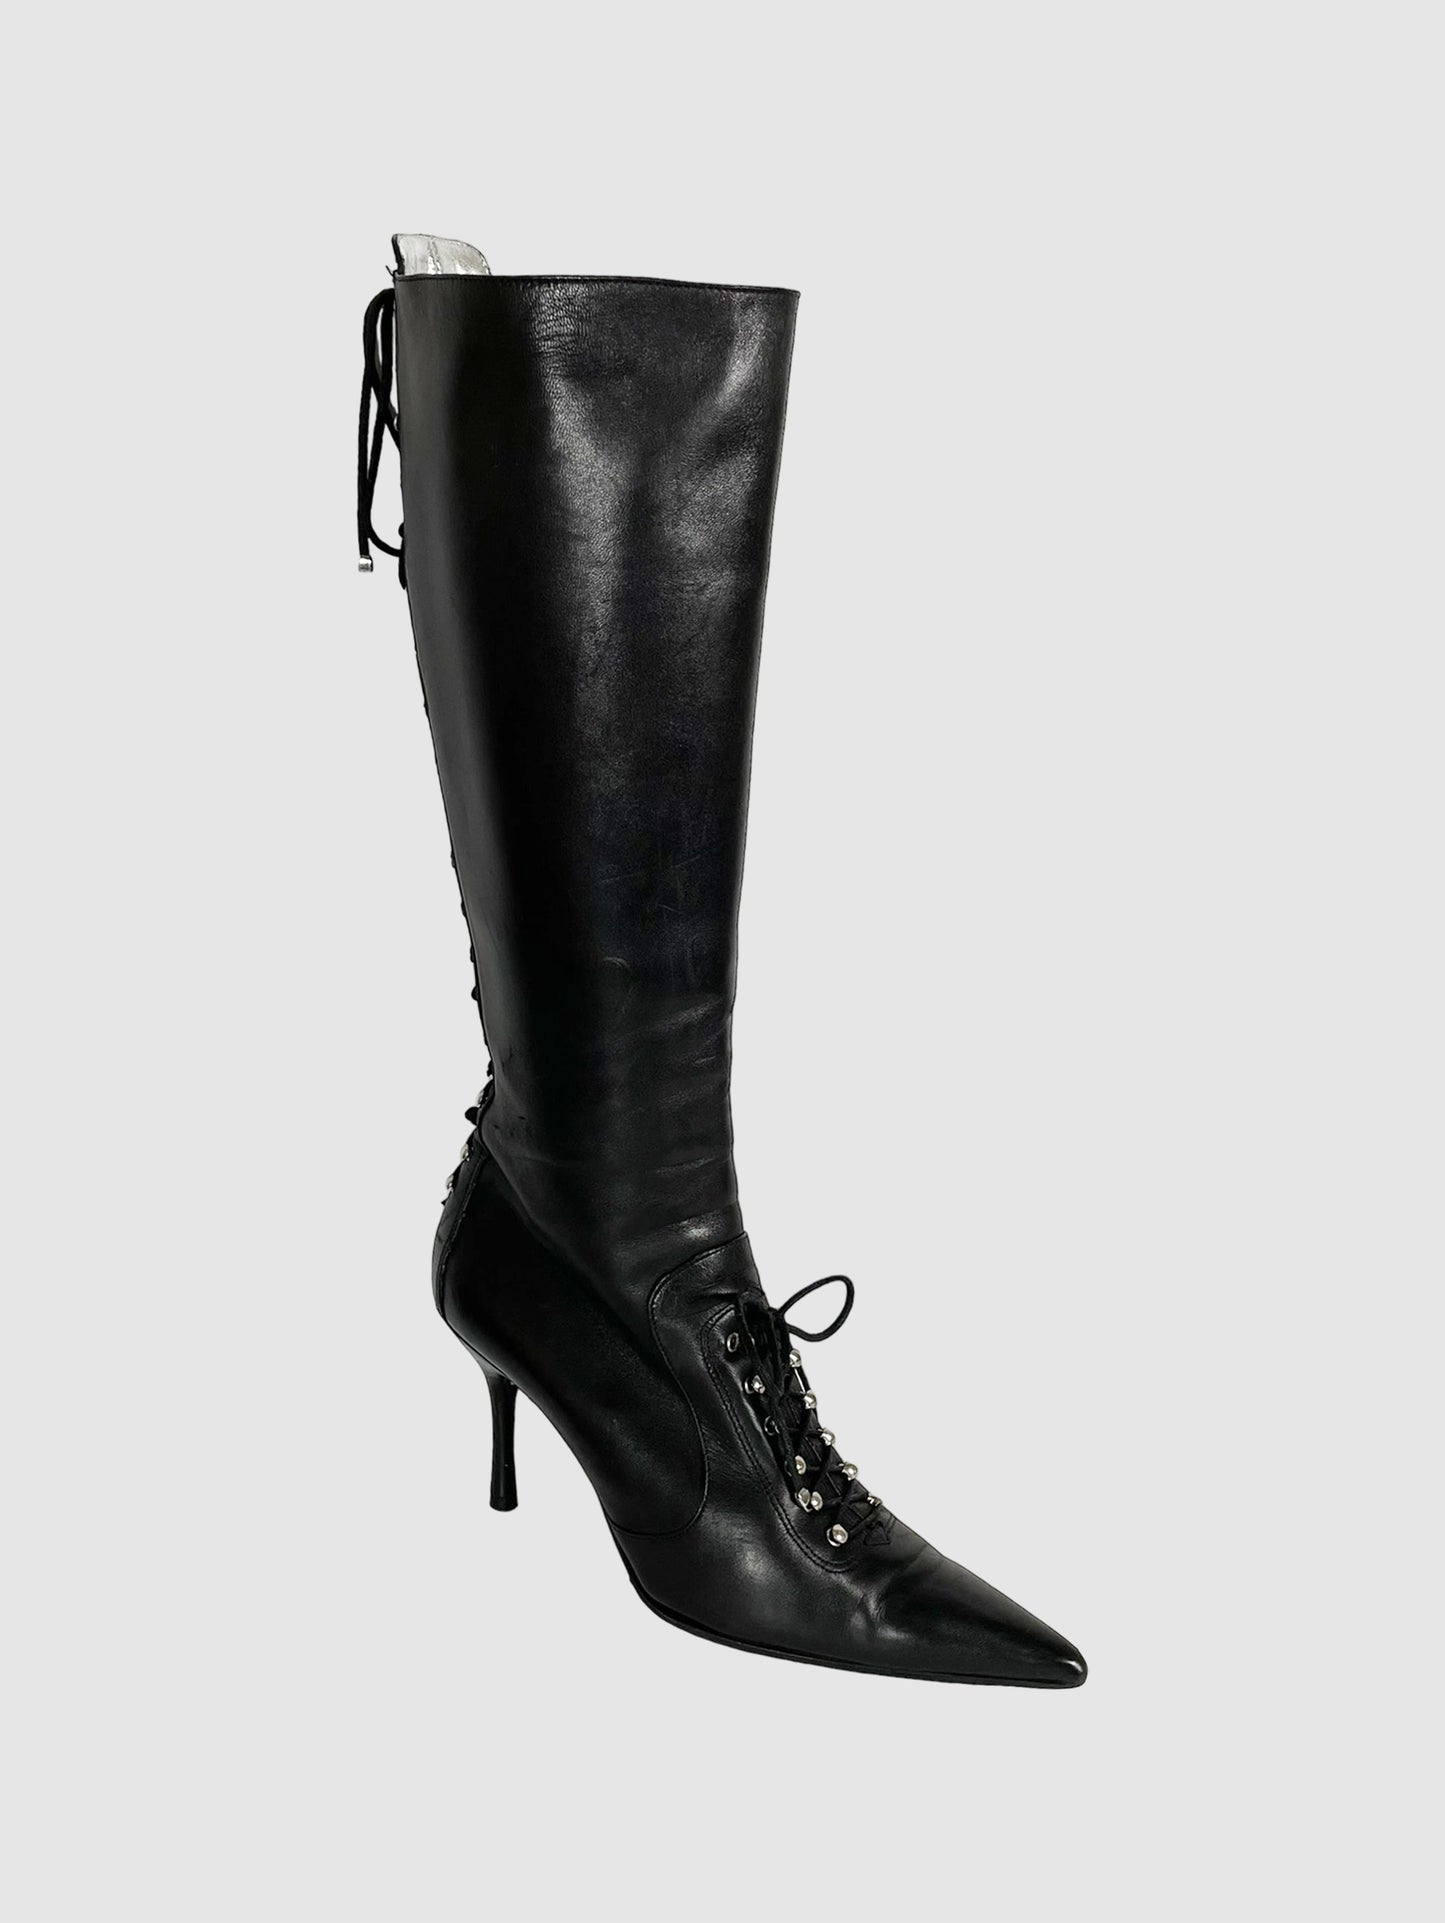 Dolce & Gabbana Lace-Up Stiletto Boots - Size 38